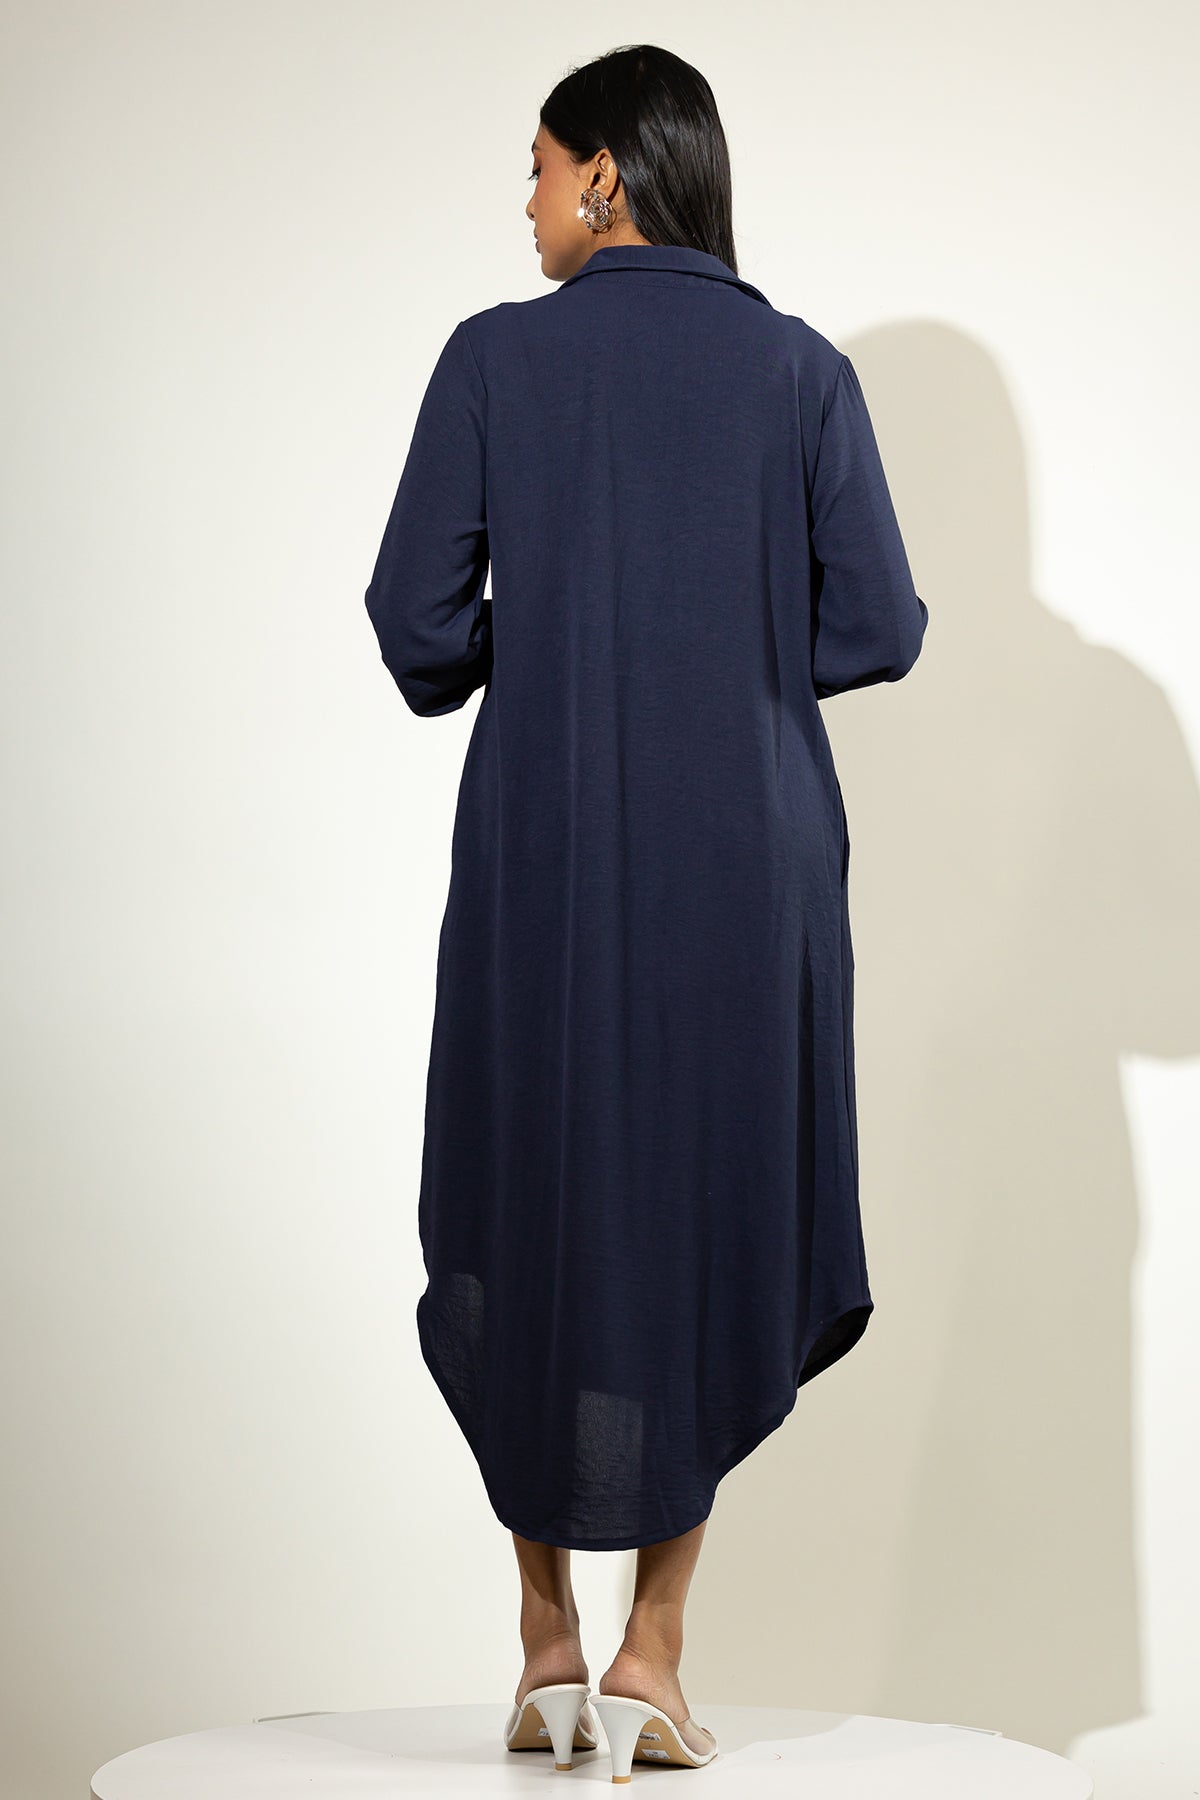 Envogue Women's Long Sleeve Casual Dress